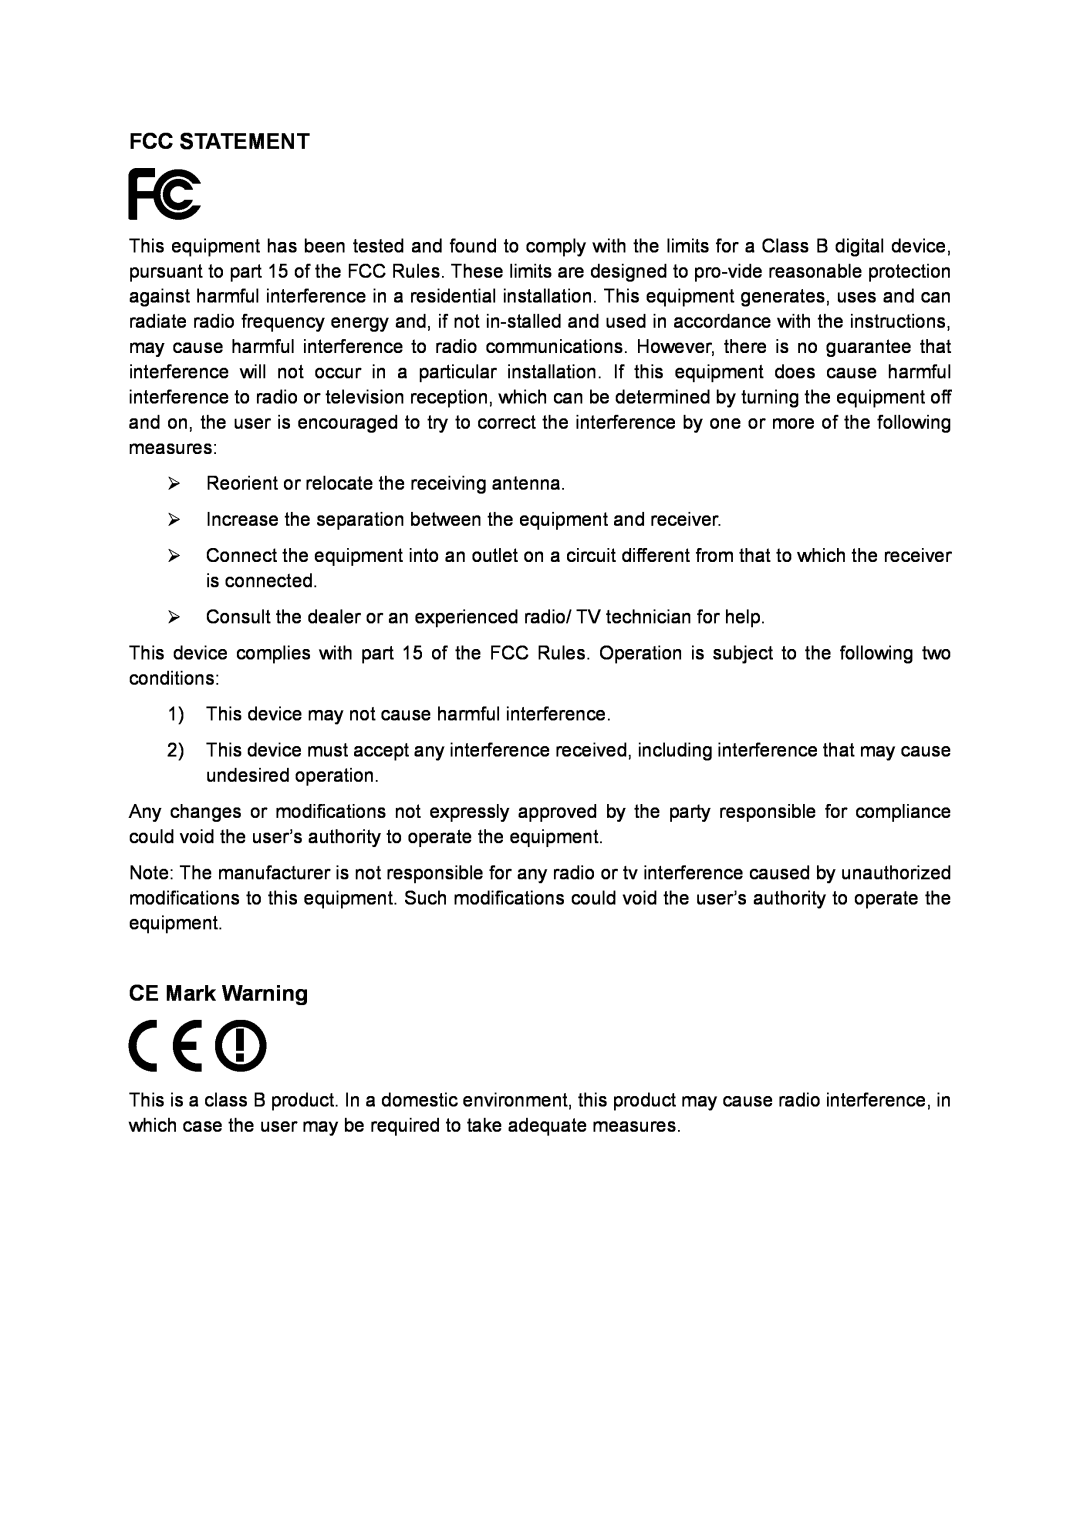 TP-Link TL-SC3130G manual Fcc Statement, CE Mark Warning 